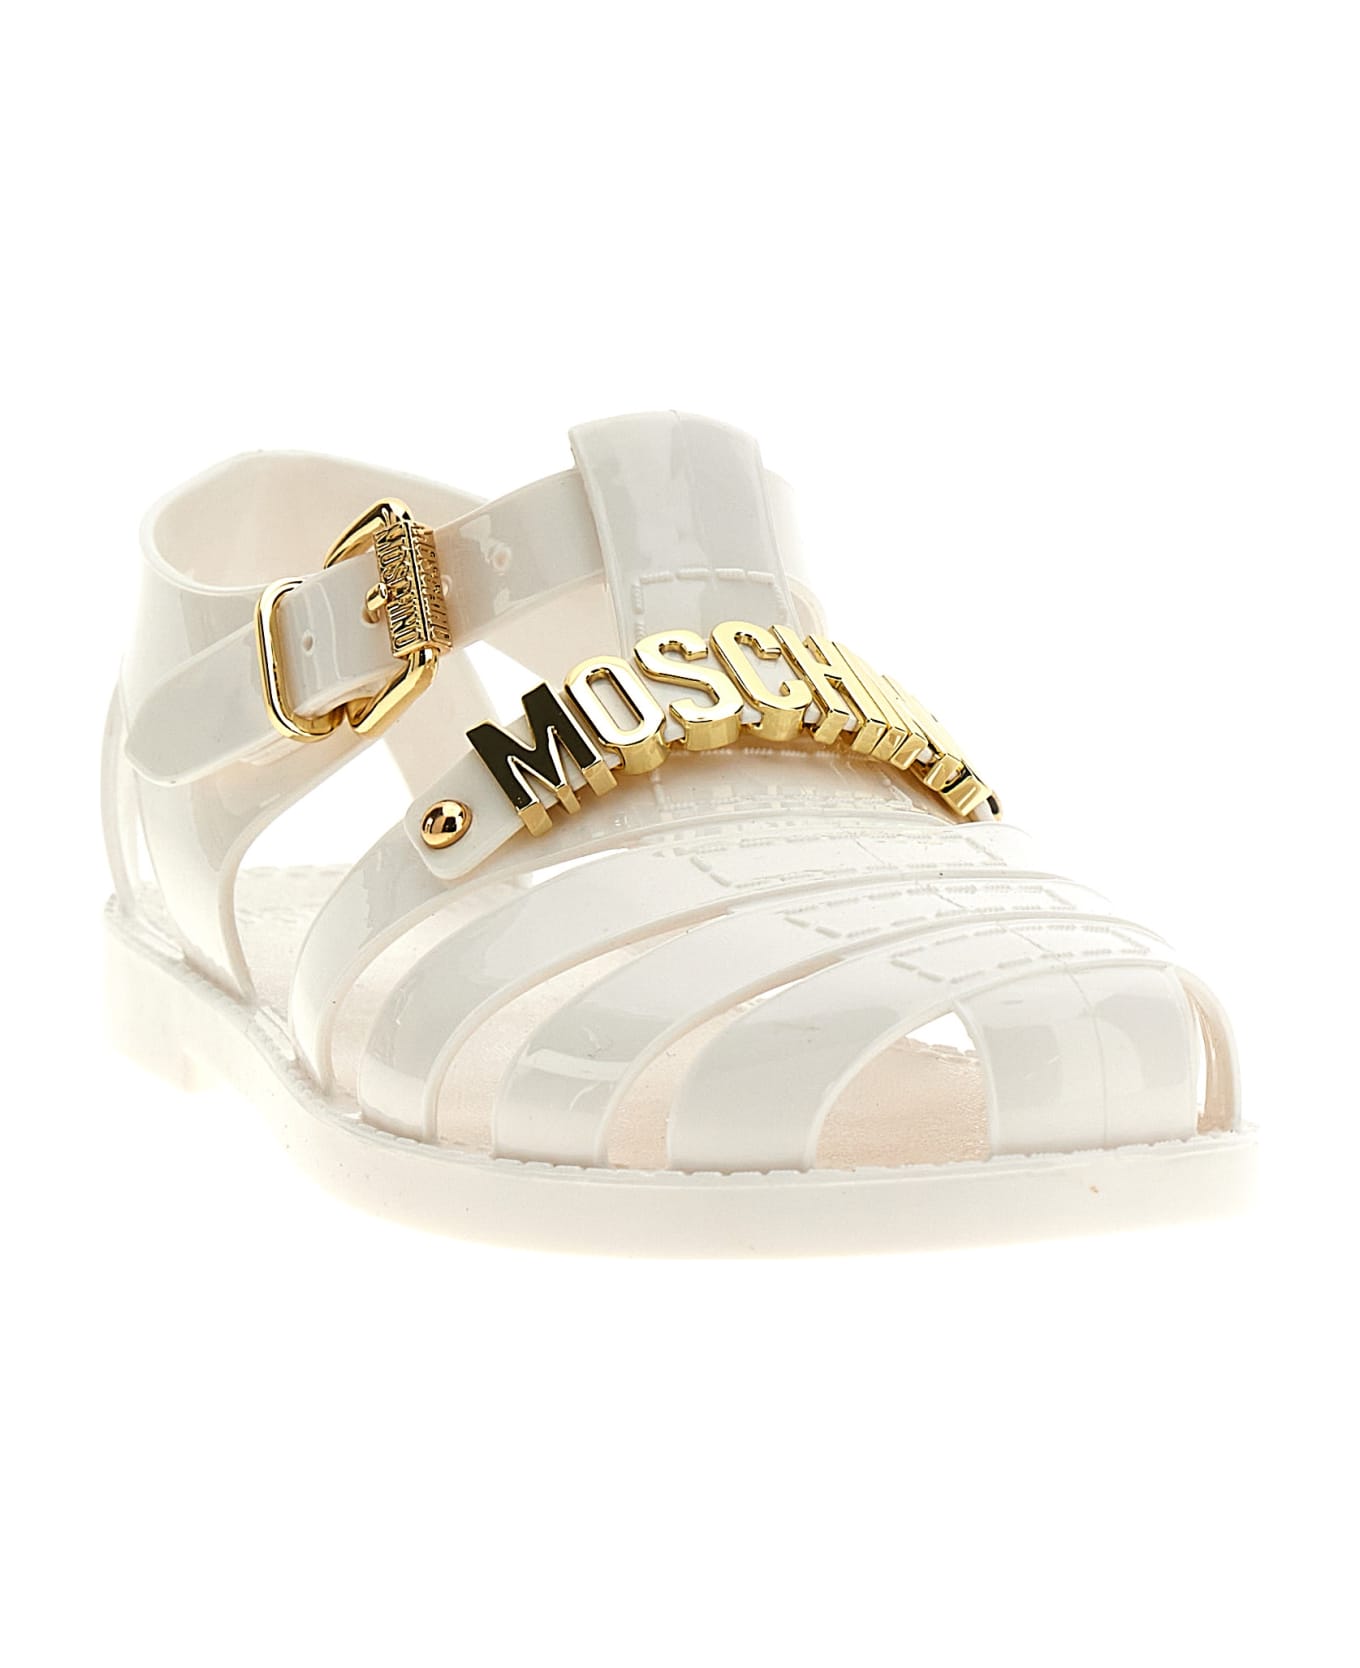 Moschino Jelly Sandals - White